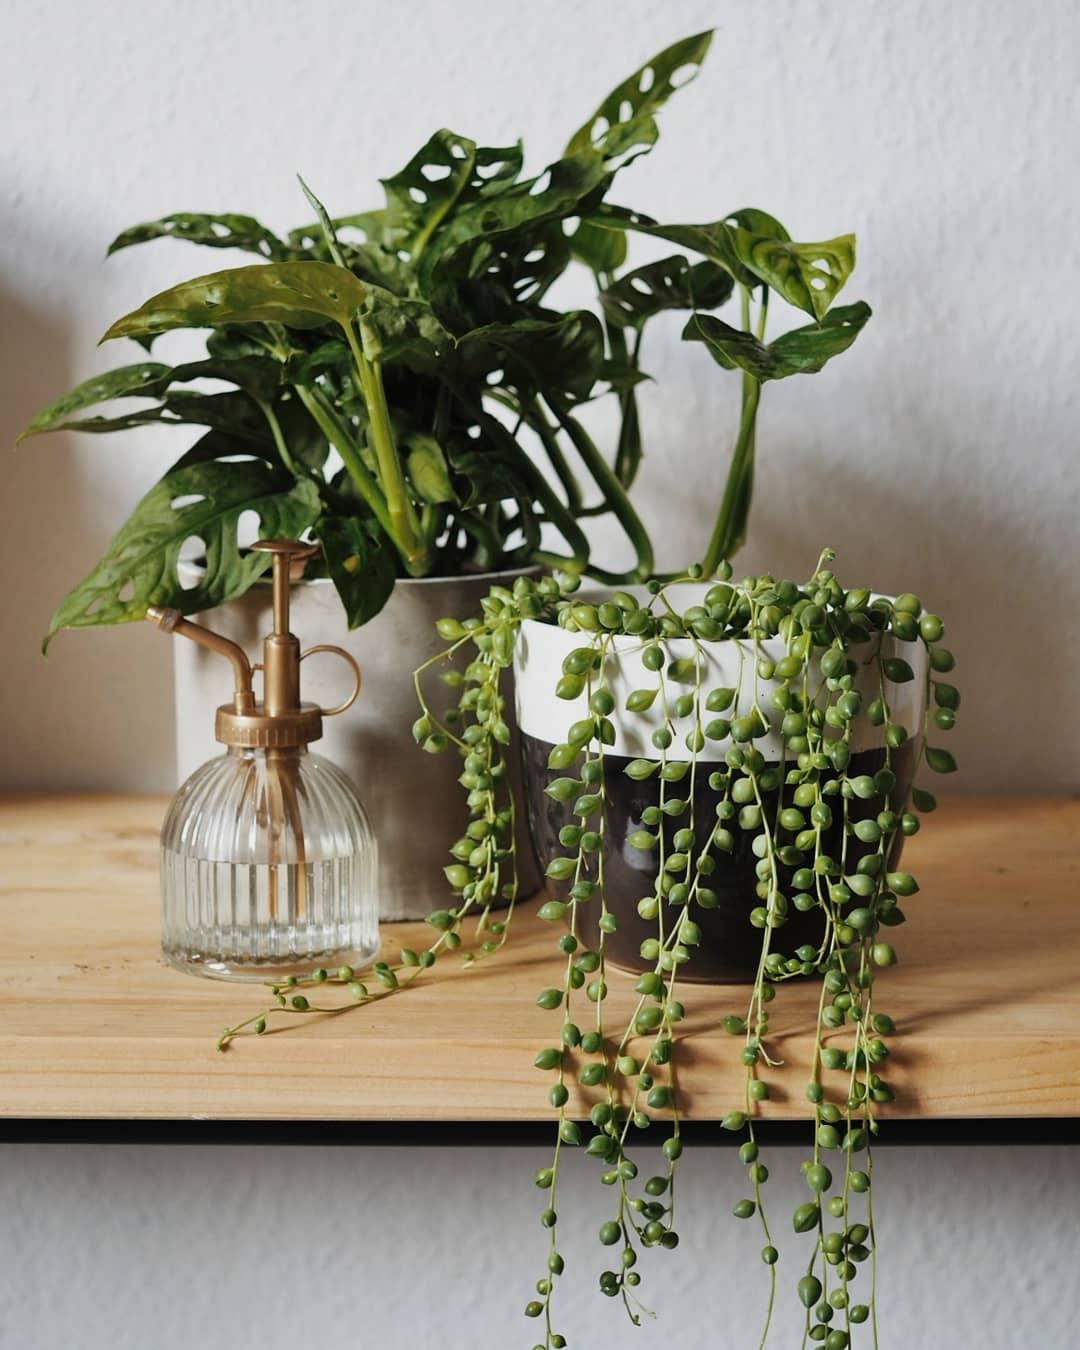 Plants are friends! 

#plantlove #urbanjungle #grün #plantlady #home #details #pflanzen #monstera 